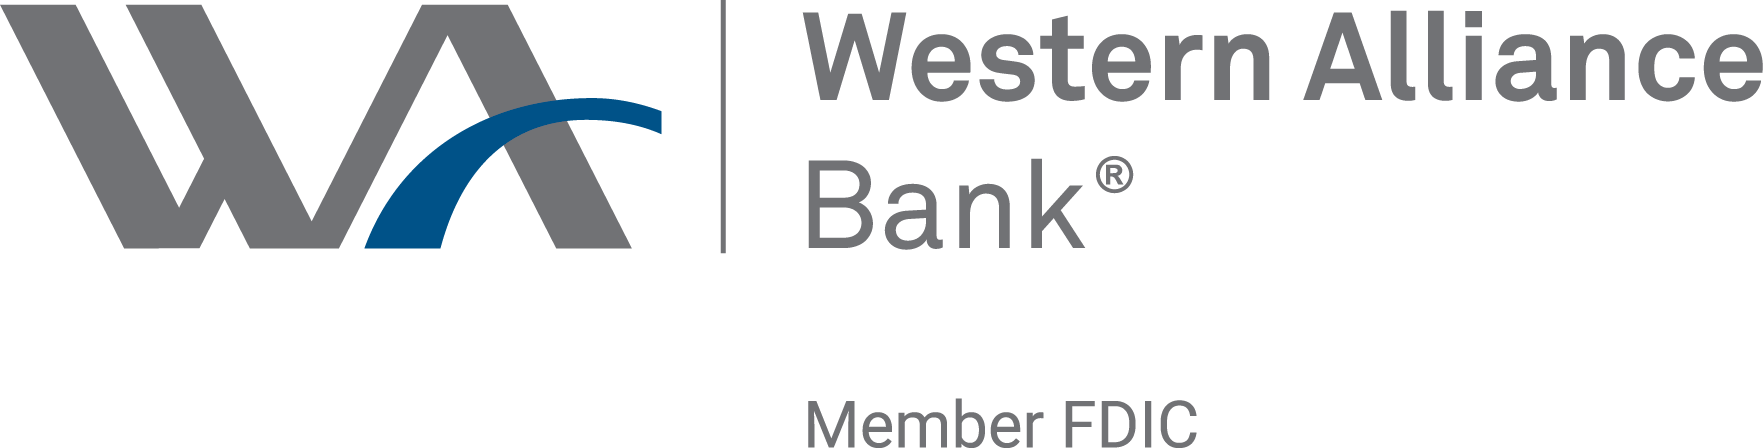 Amex Comparison: Western Alliance Bank